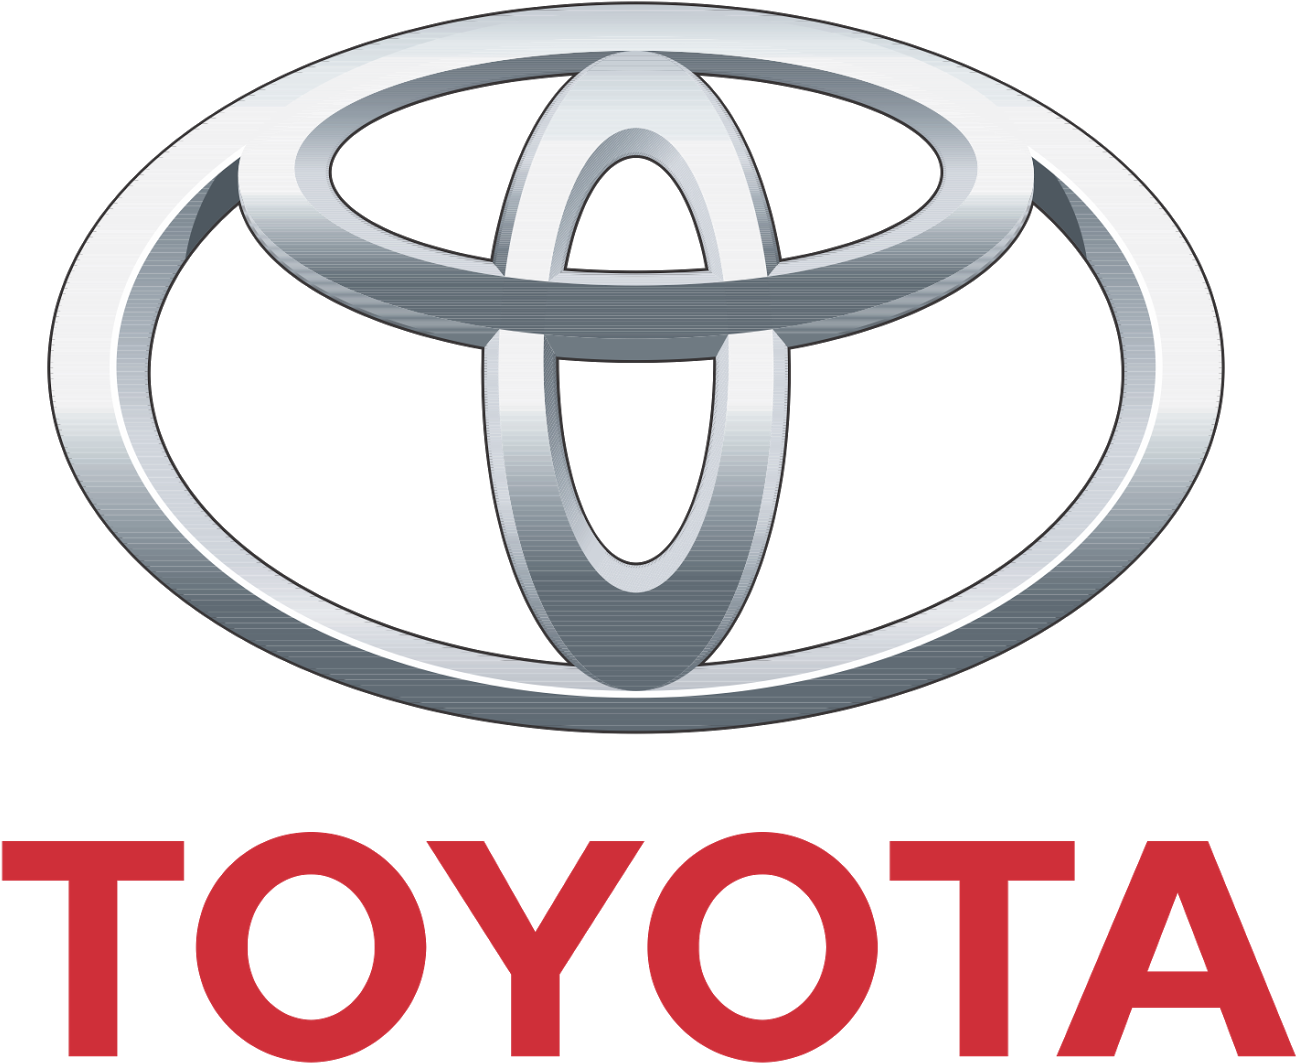 Download Toyota Logo Png Vector Transparent Background Toyota Logo Png Image With No Background Pngkey Com